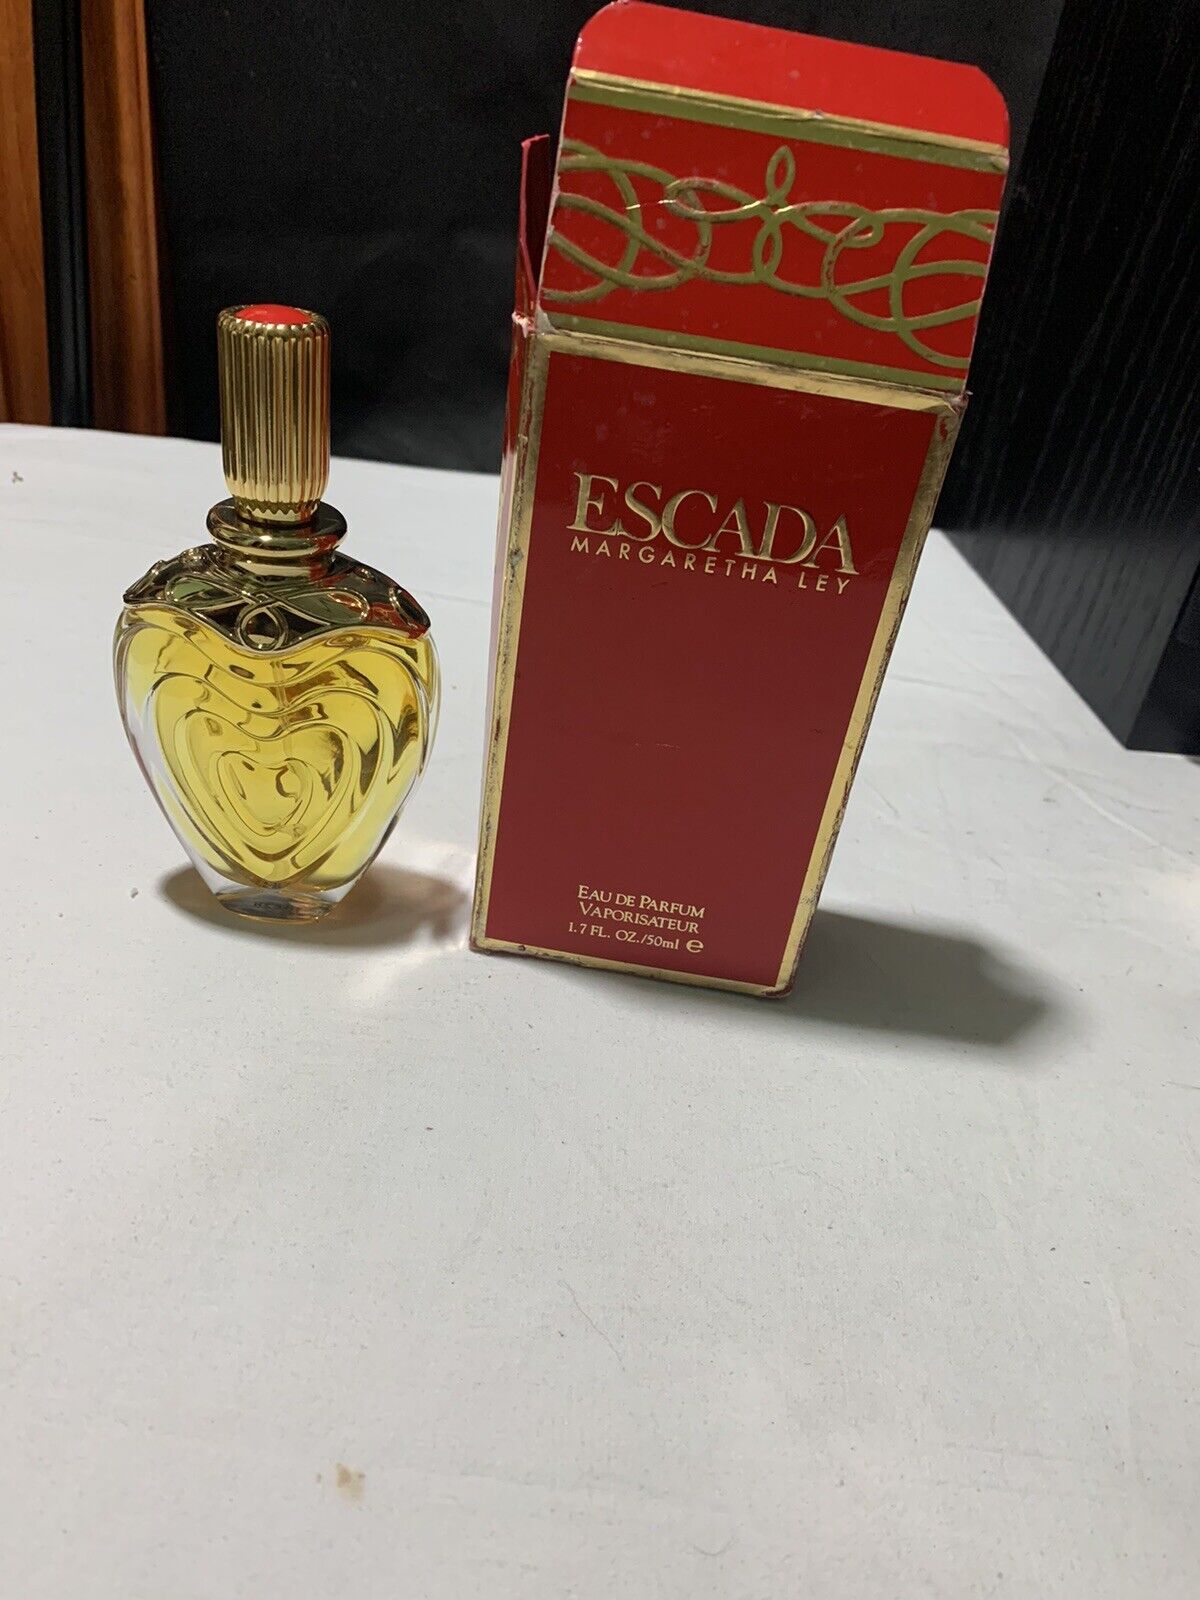 Rare ESCADA Margaretha Ley Eau de Parfum Perfume Splash 1.7 fl oz 50 ml in Box